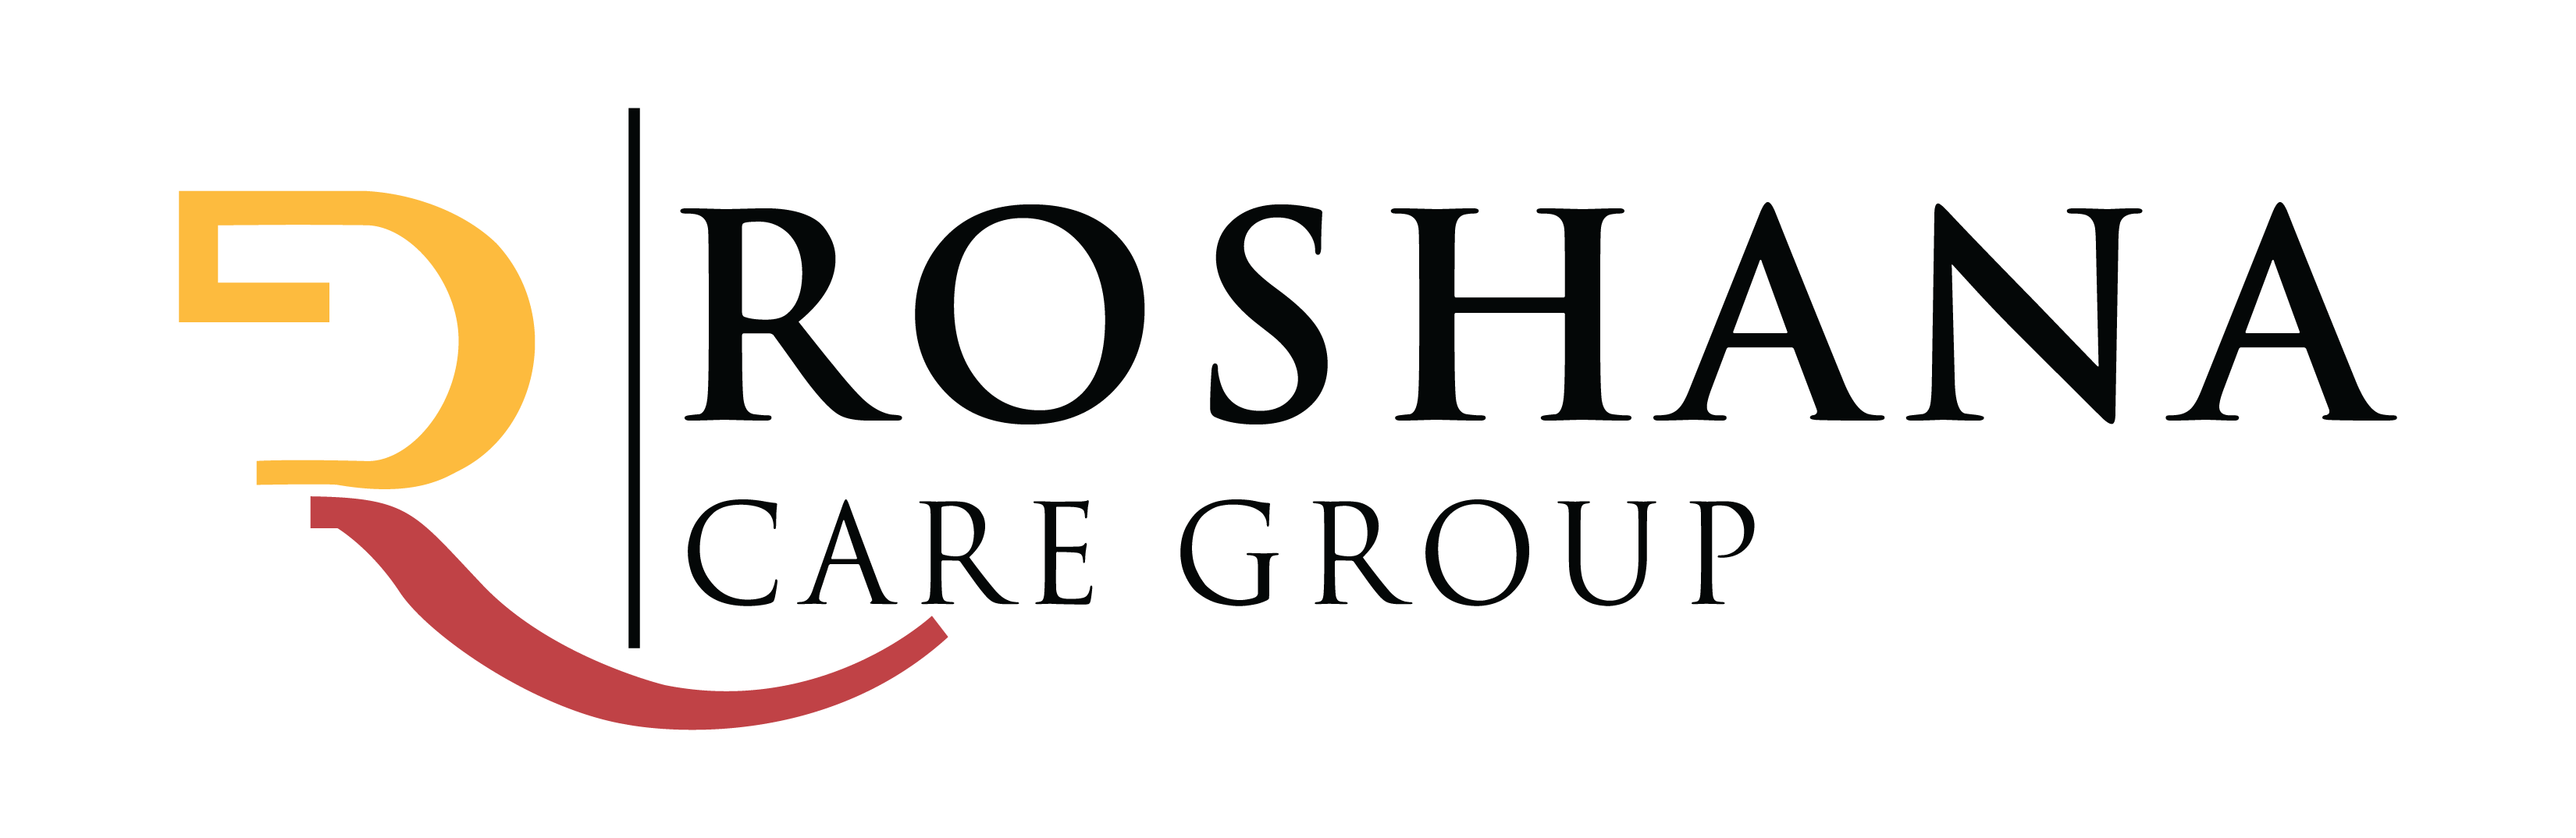 Roshana-Care-Group_comp-01